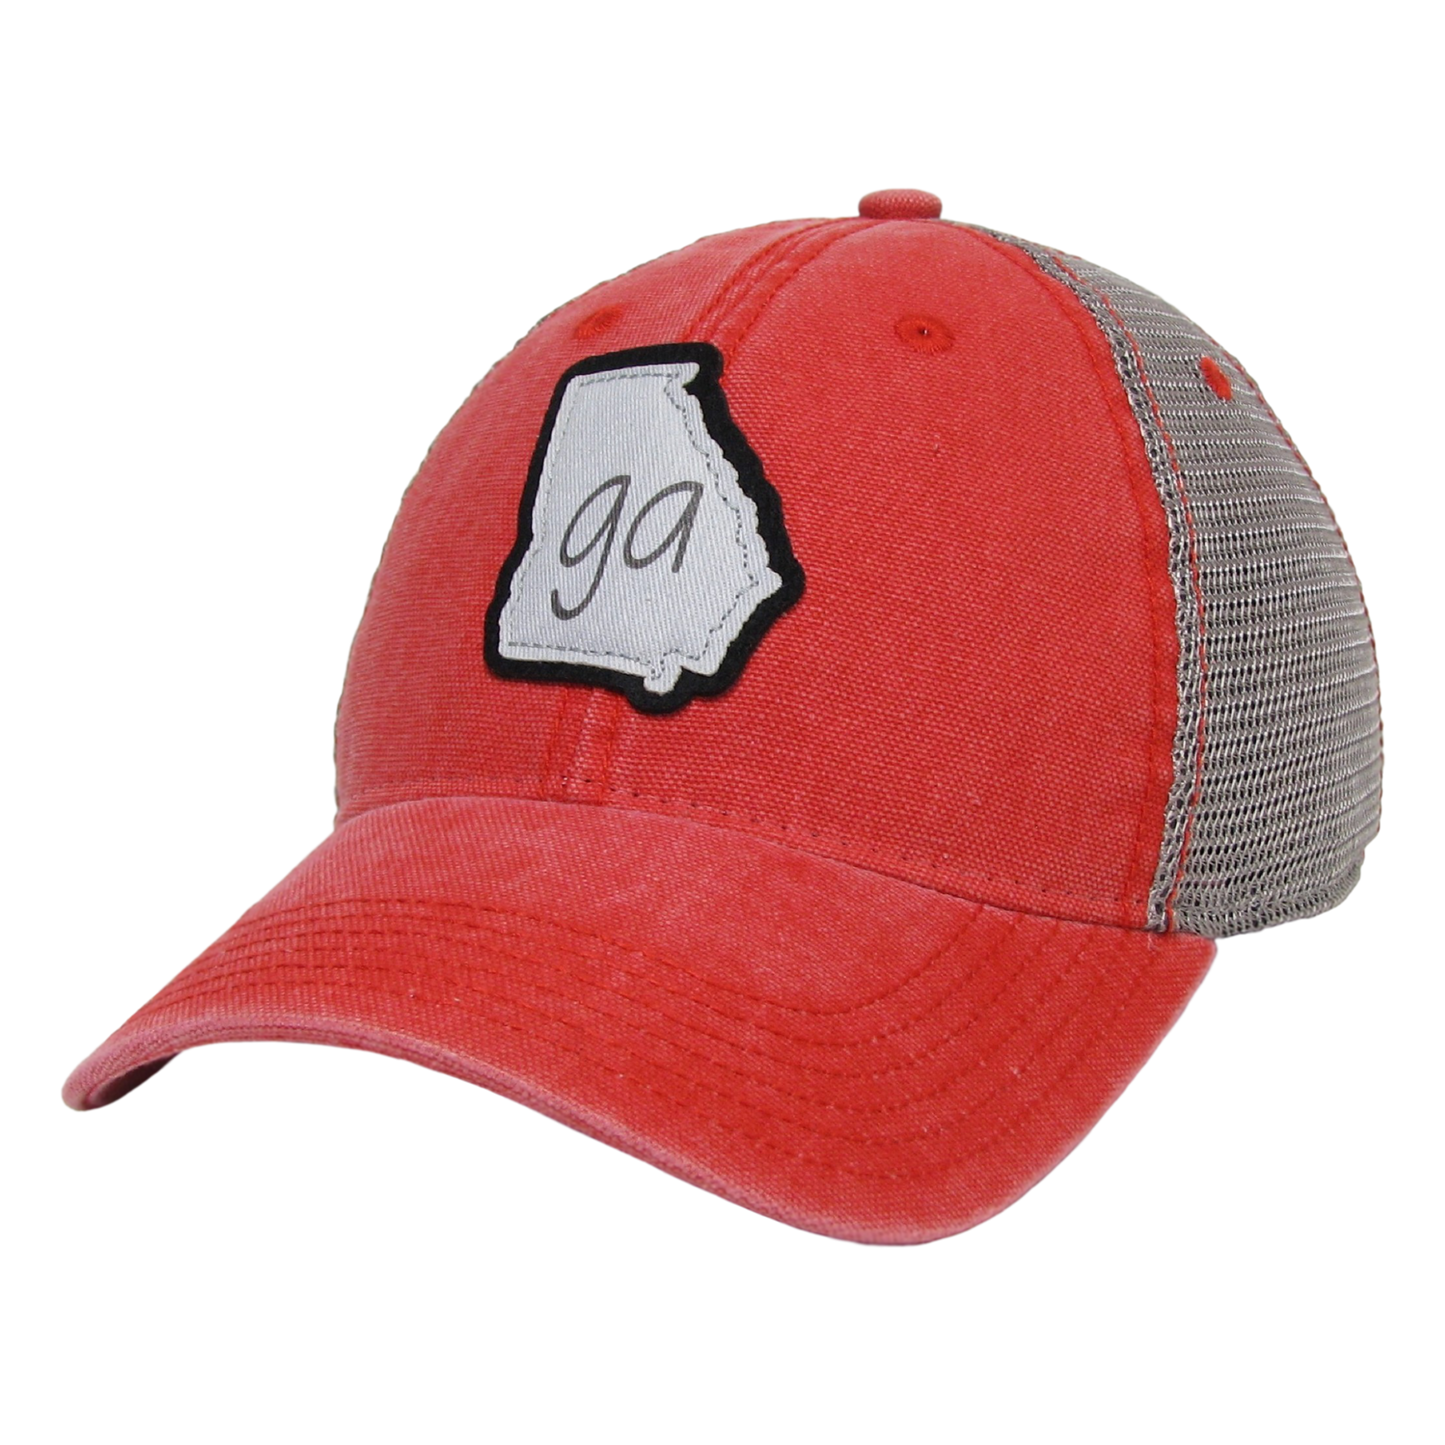 Georgia Dashboard Trucker Hat in Red/Grey